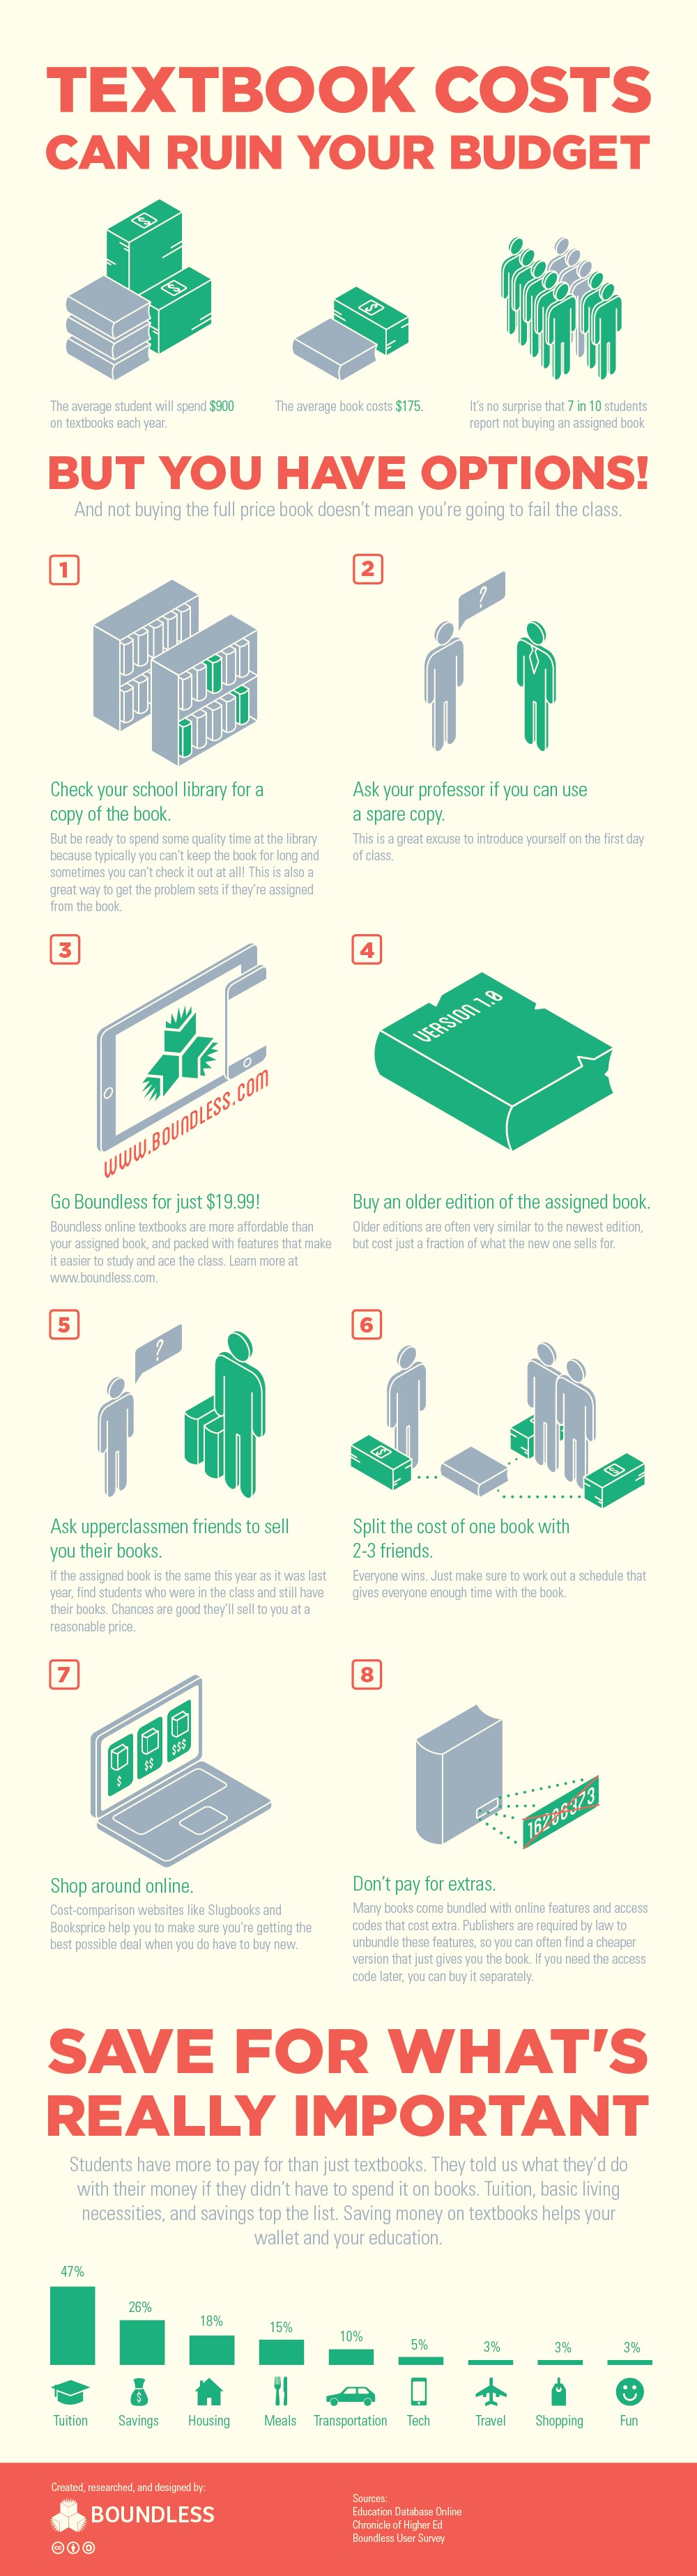 8 Ways To Save Money On Textbooks